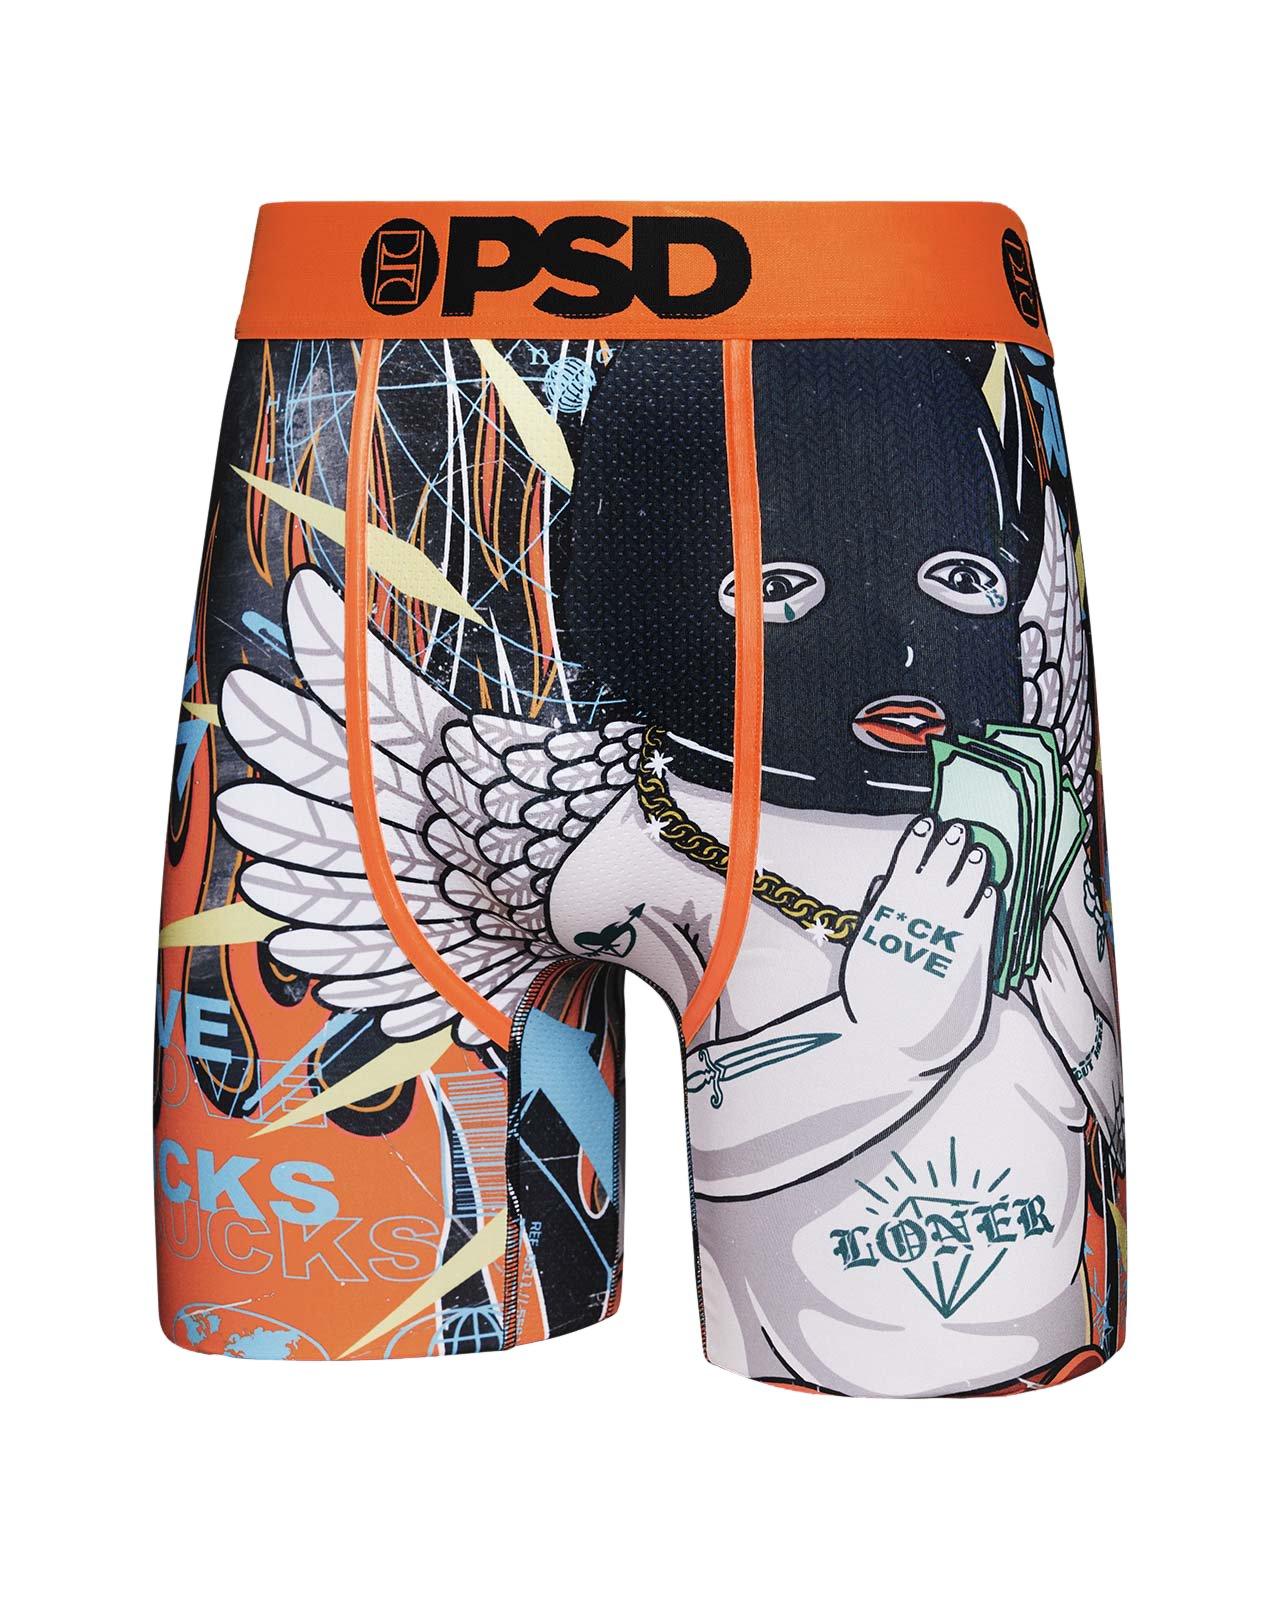 PSD Underwear Men's Love Sucks Boxer Brief Multi